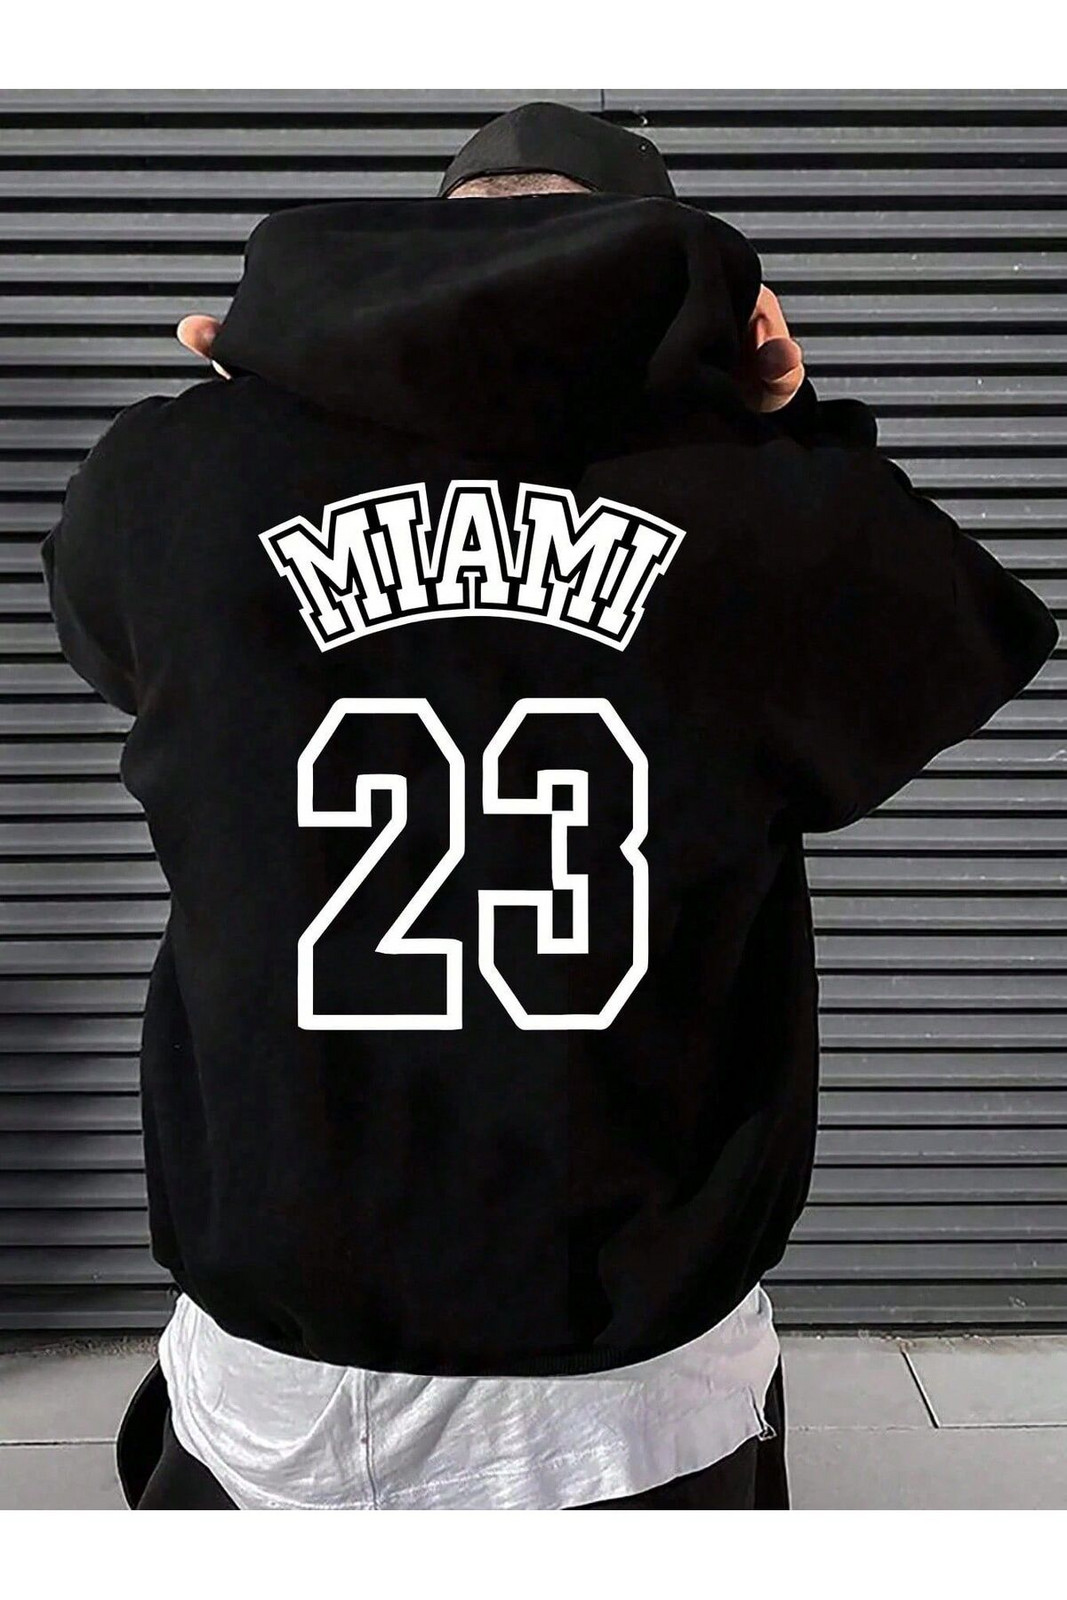 Know Unisex Black Miami 23 Printed Hoodie Sweatshirt.